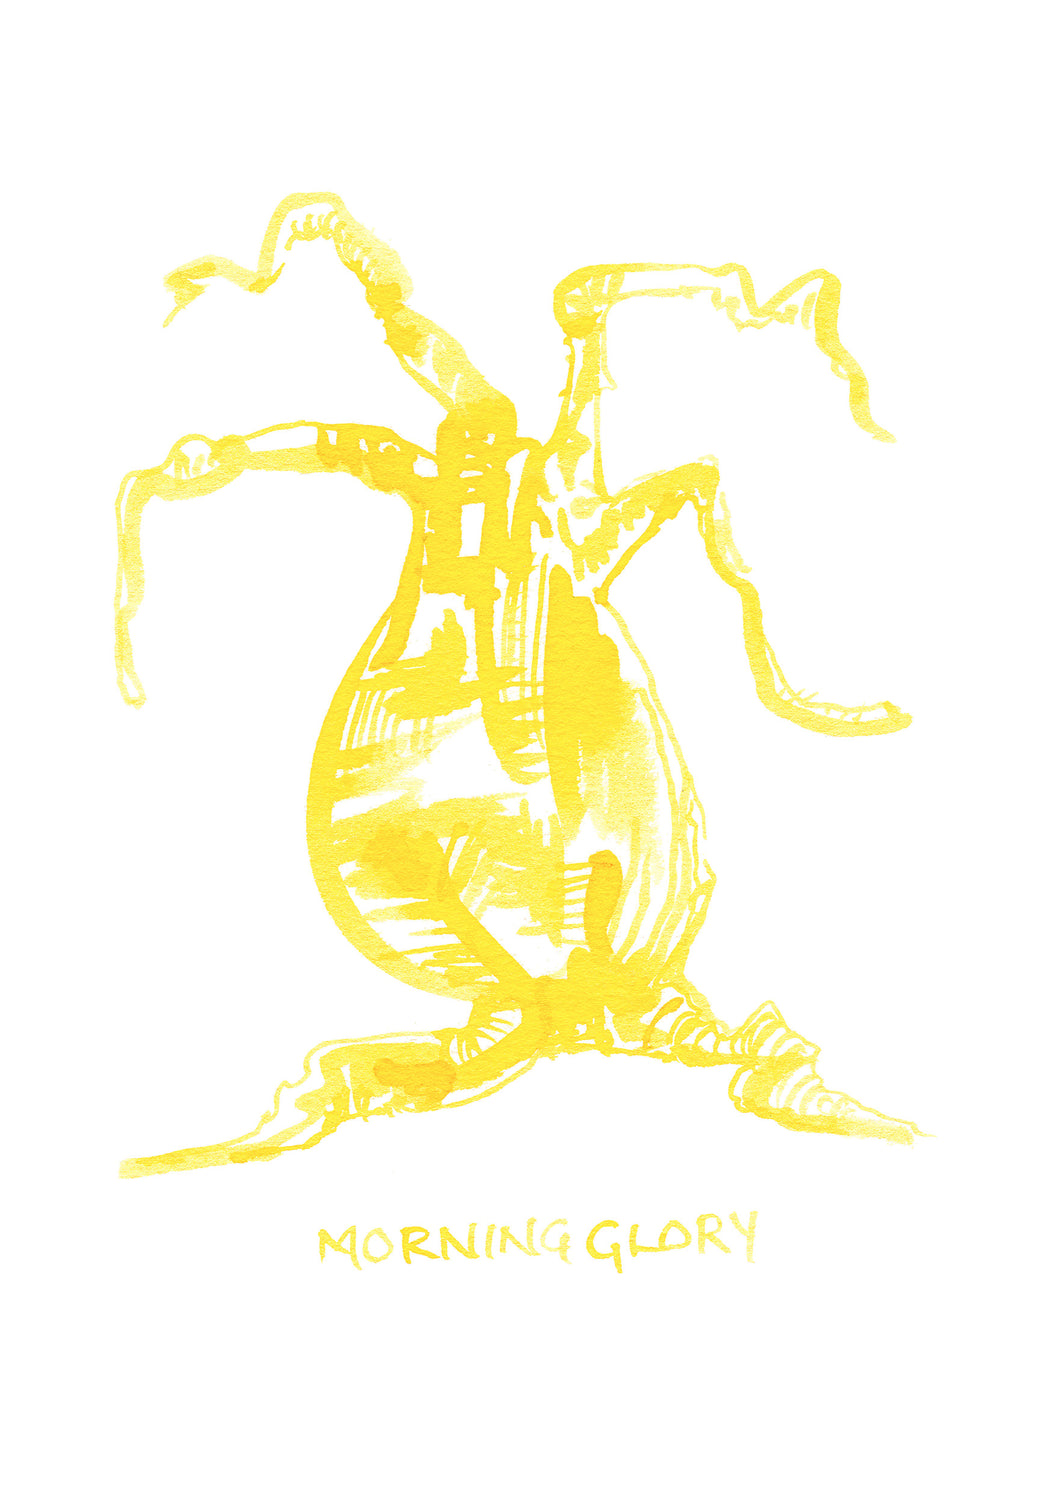 56. Morning glory